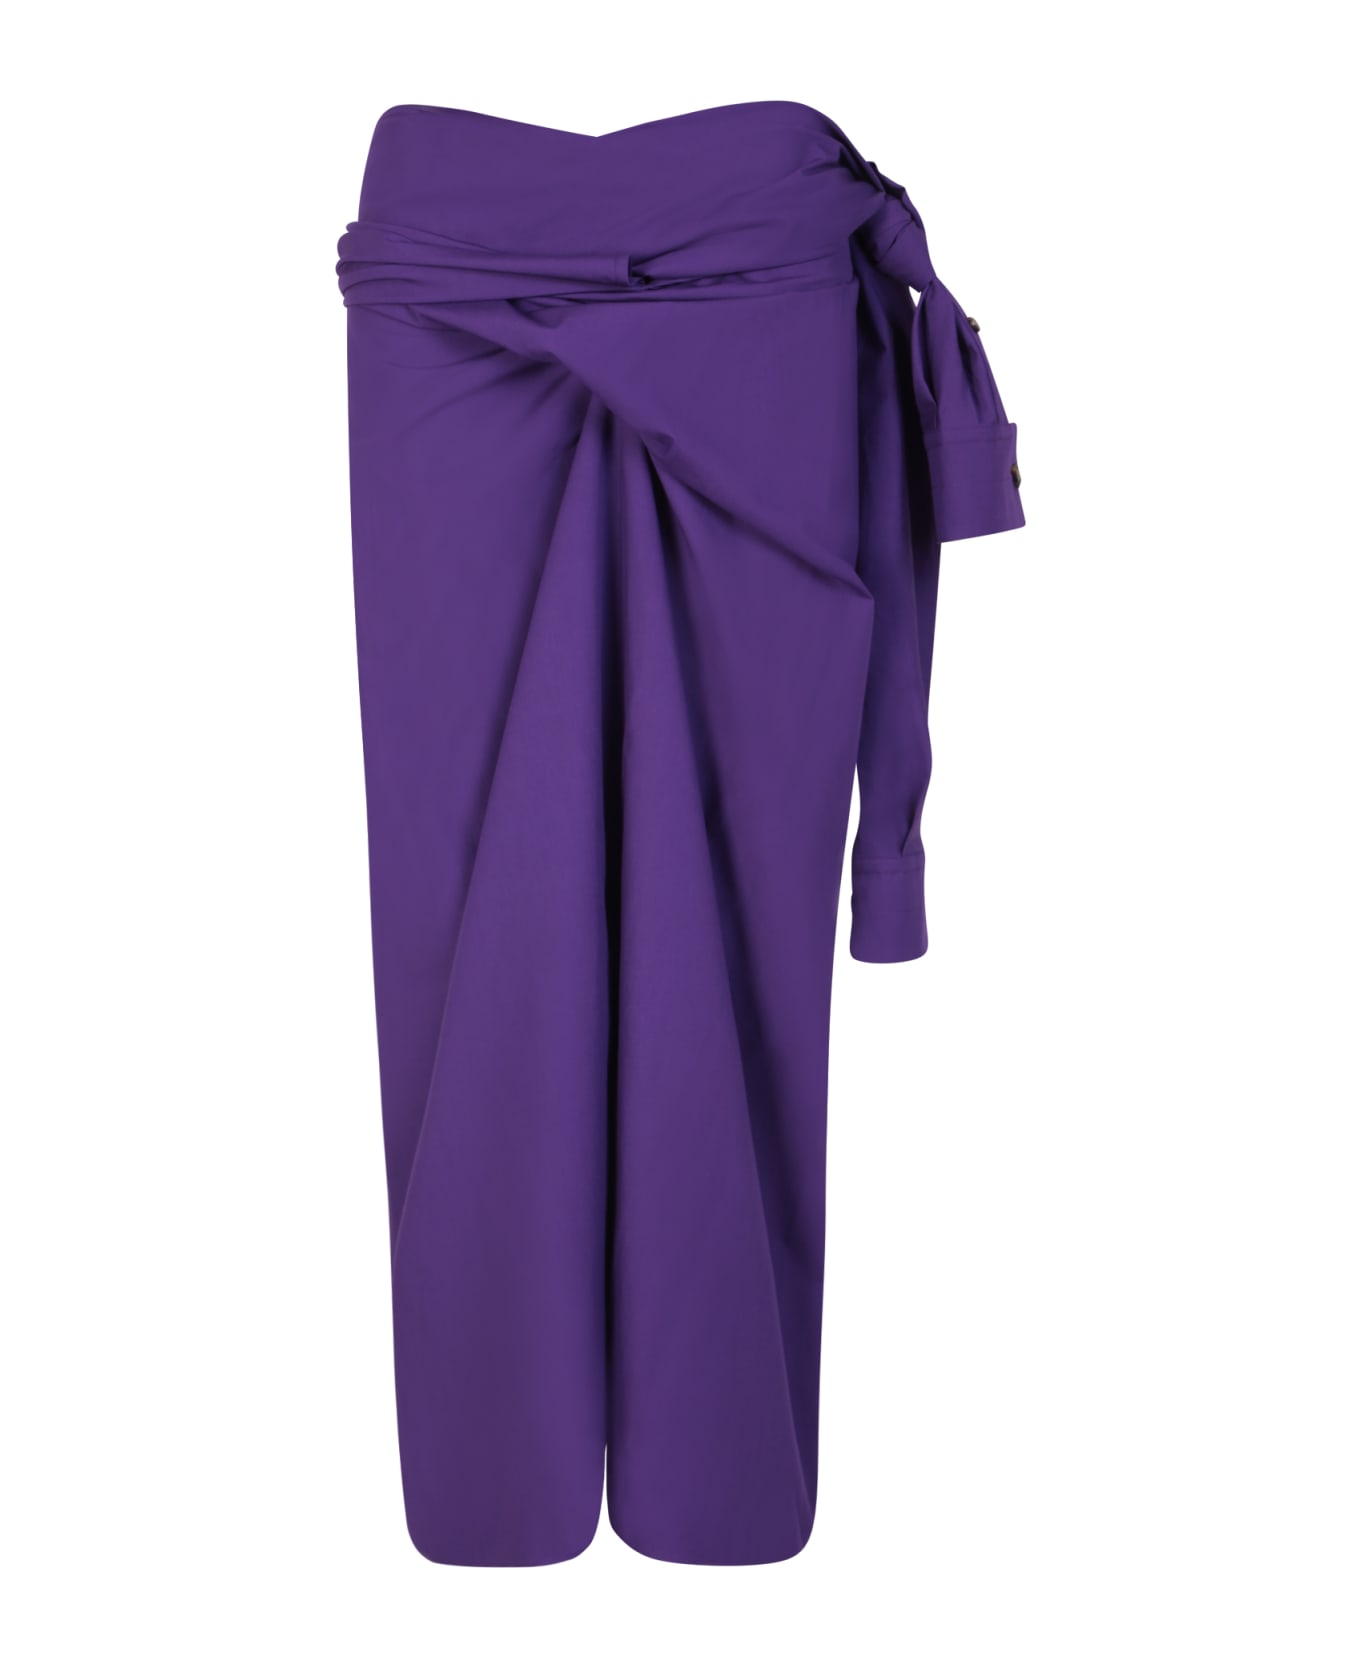 Quira Wrapped Design Purple Skirt - Purple スカート